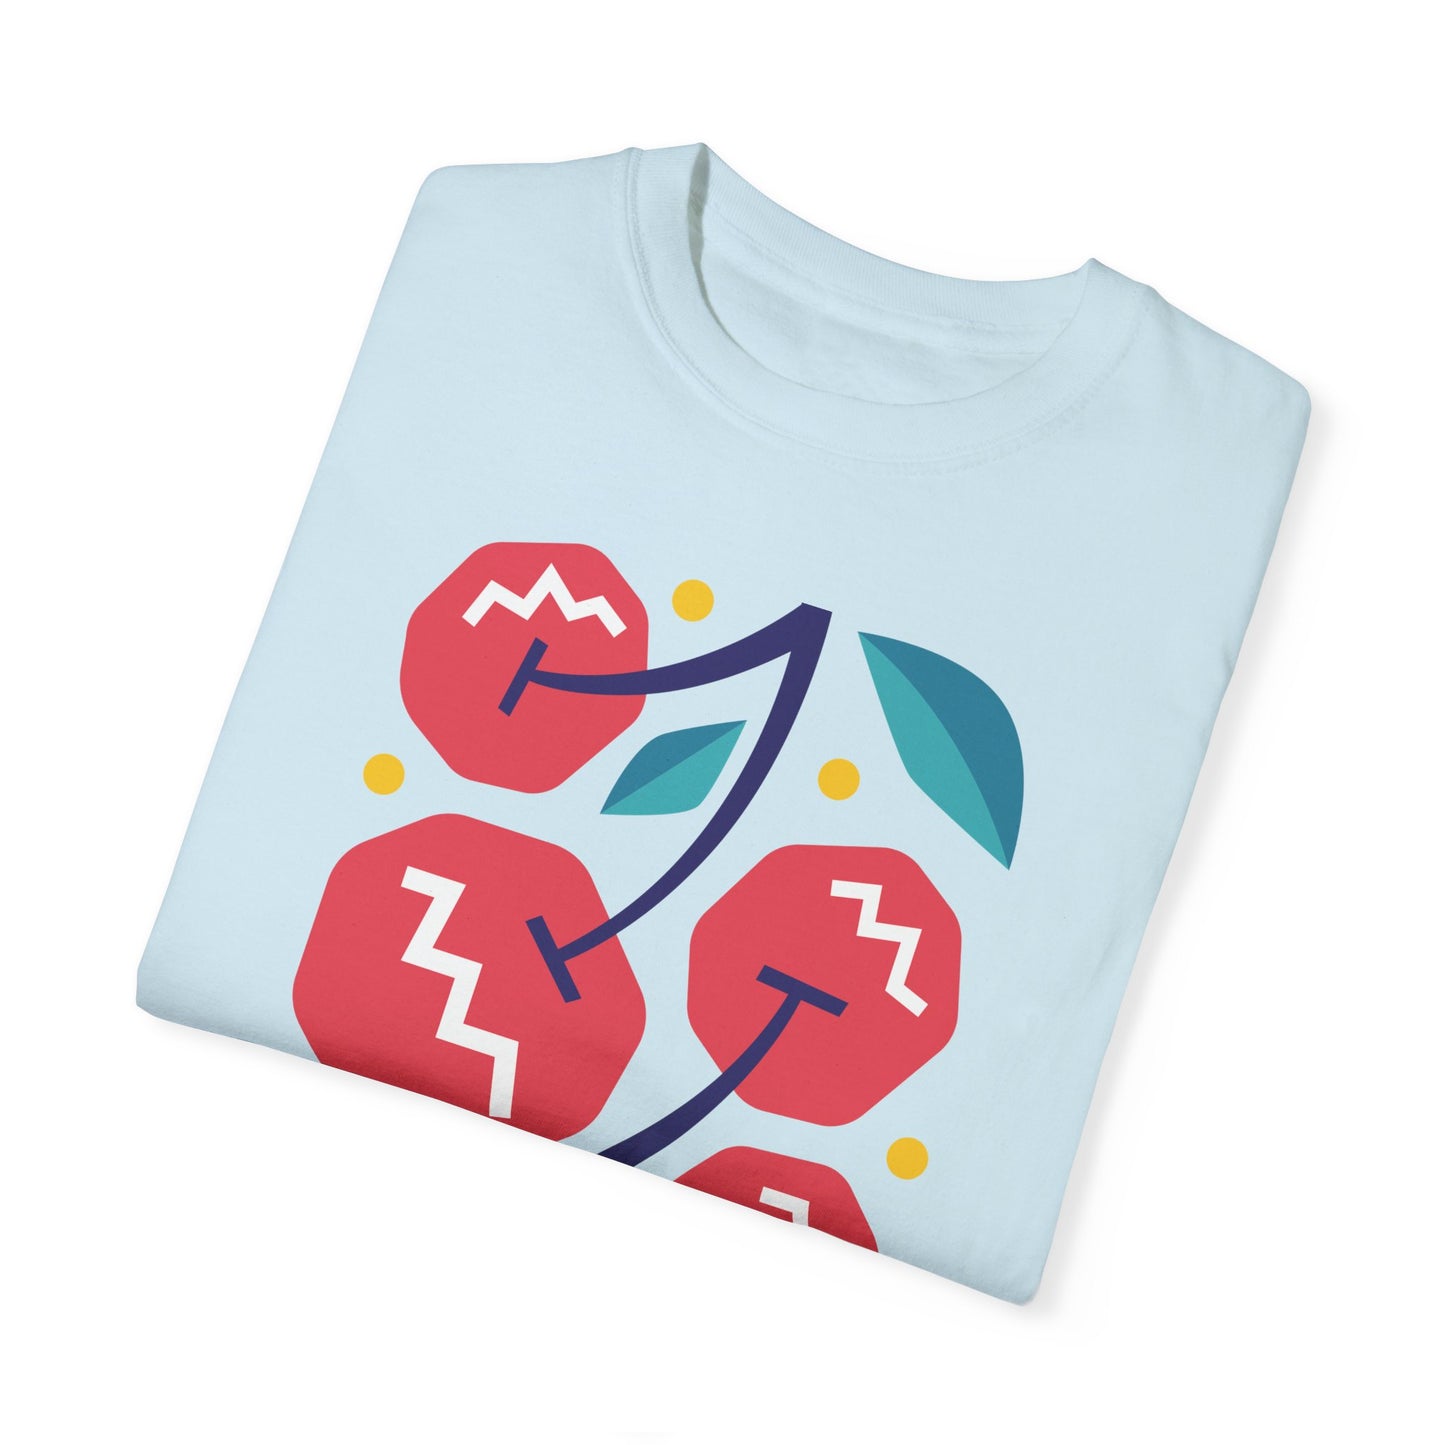 Traverse City Cherries Unisex Garment-Dyed T-shirt